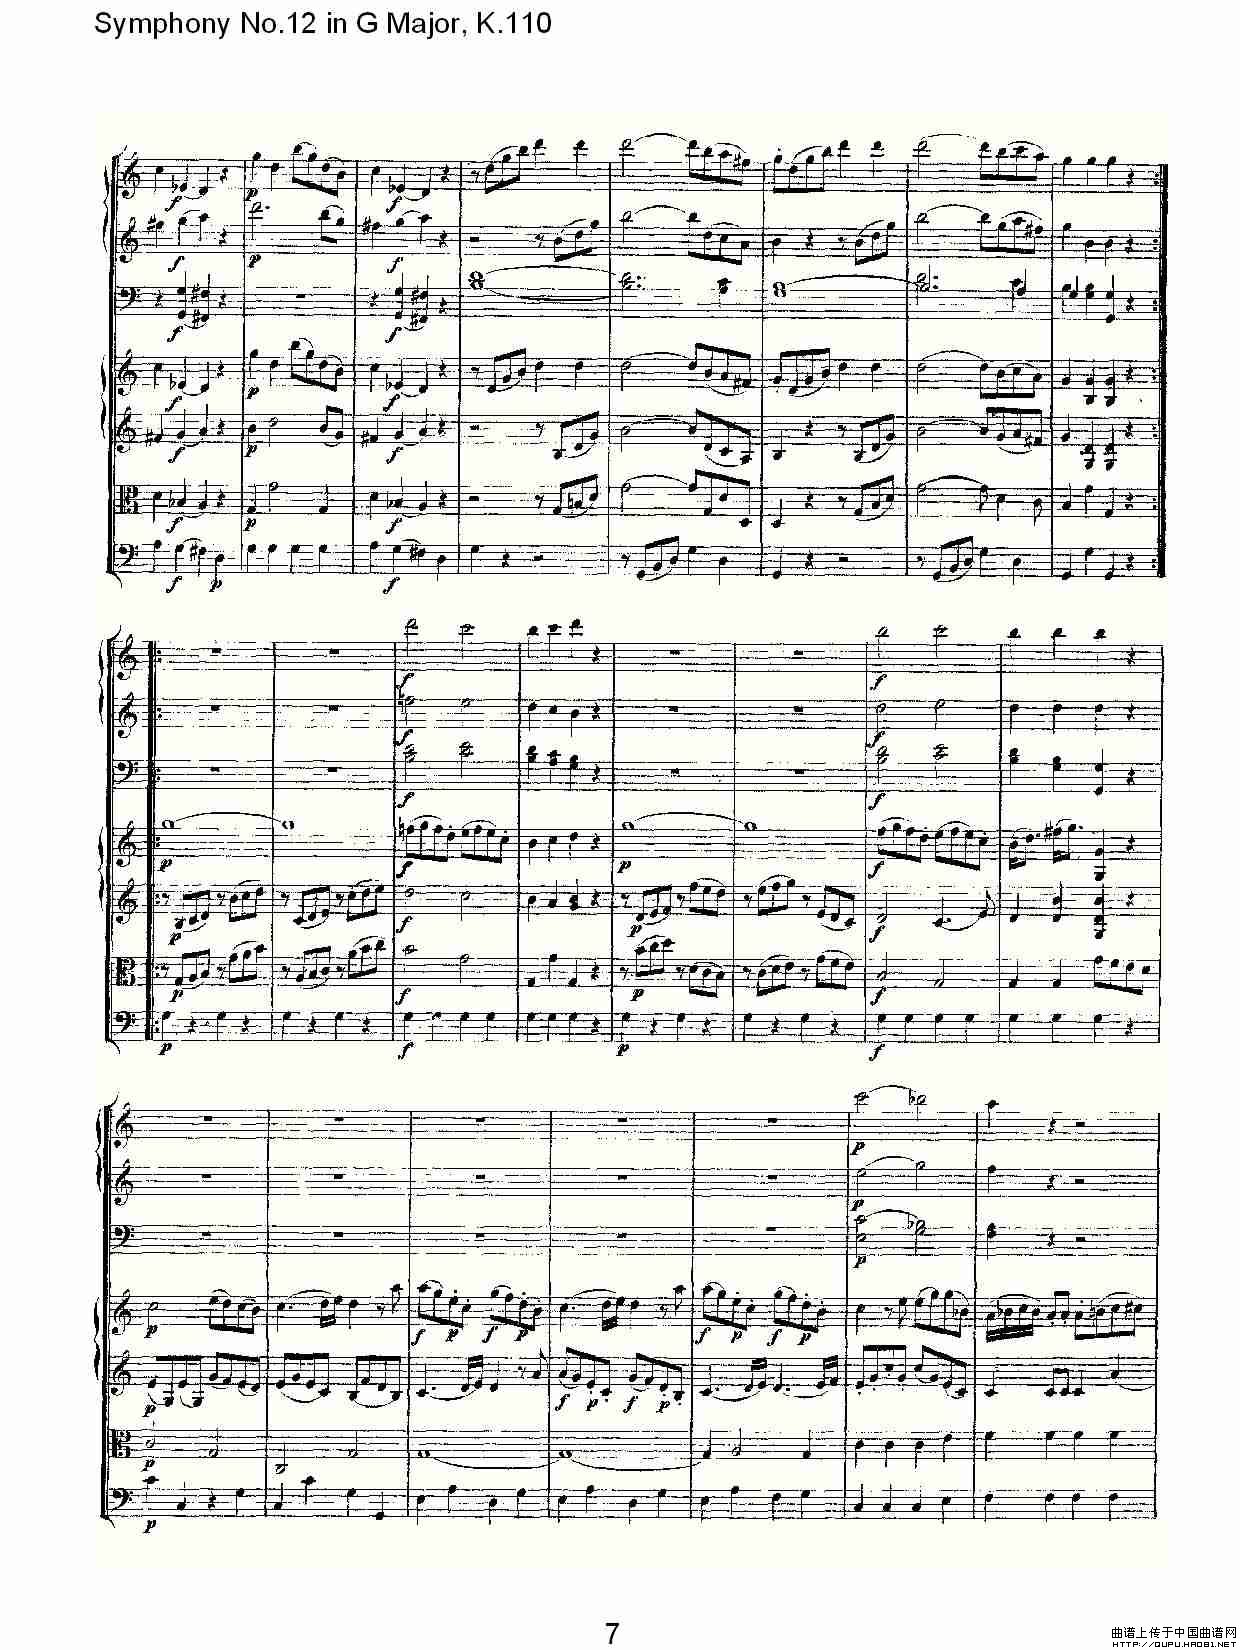 Symphony No.12 in G Major, K.110（G大调第十二交响曲K